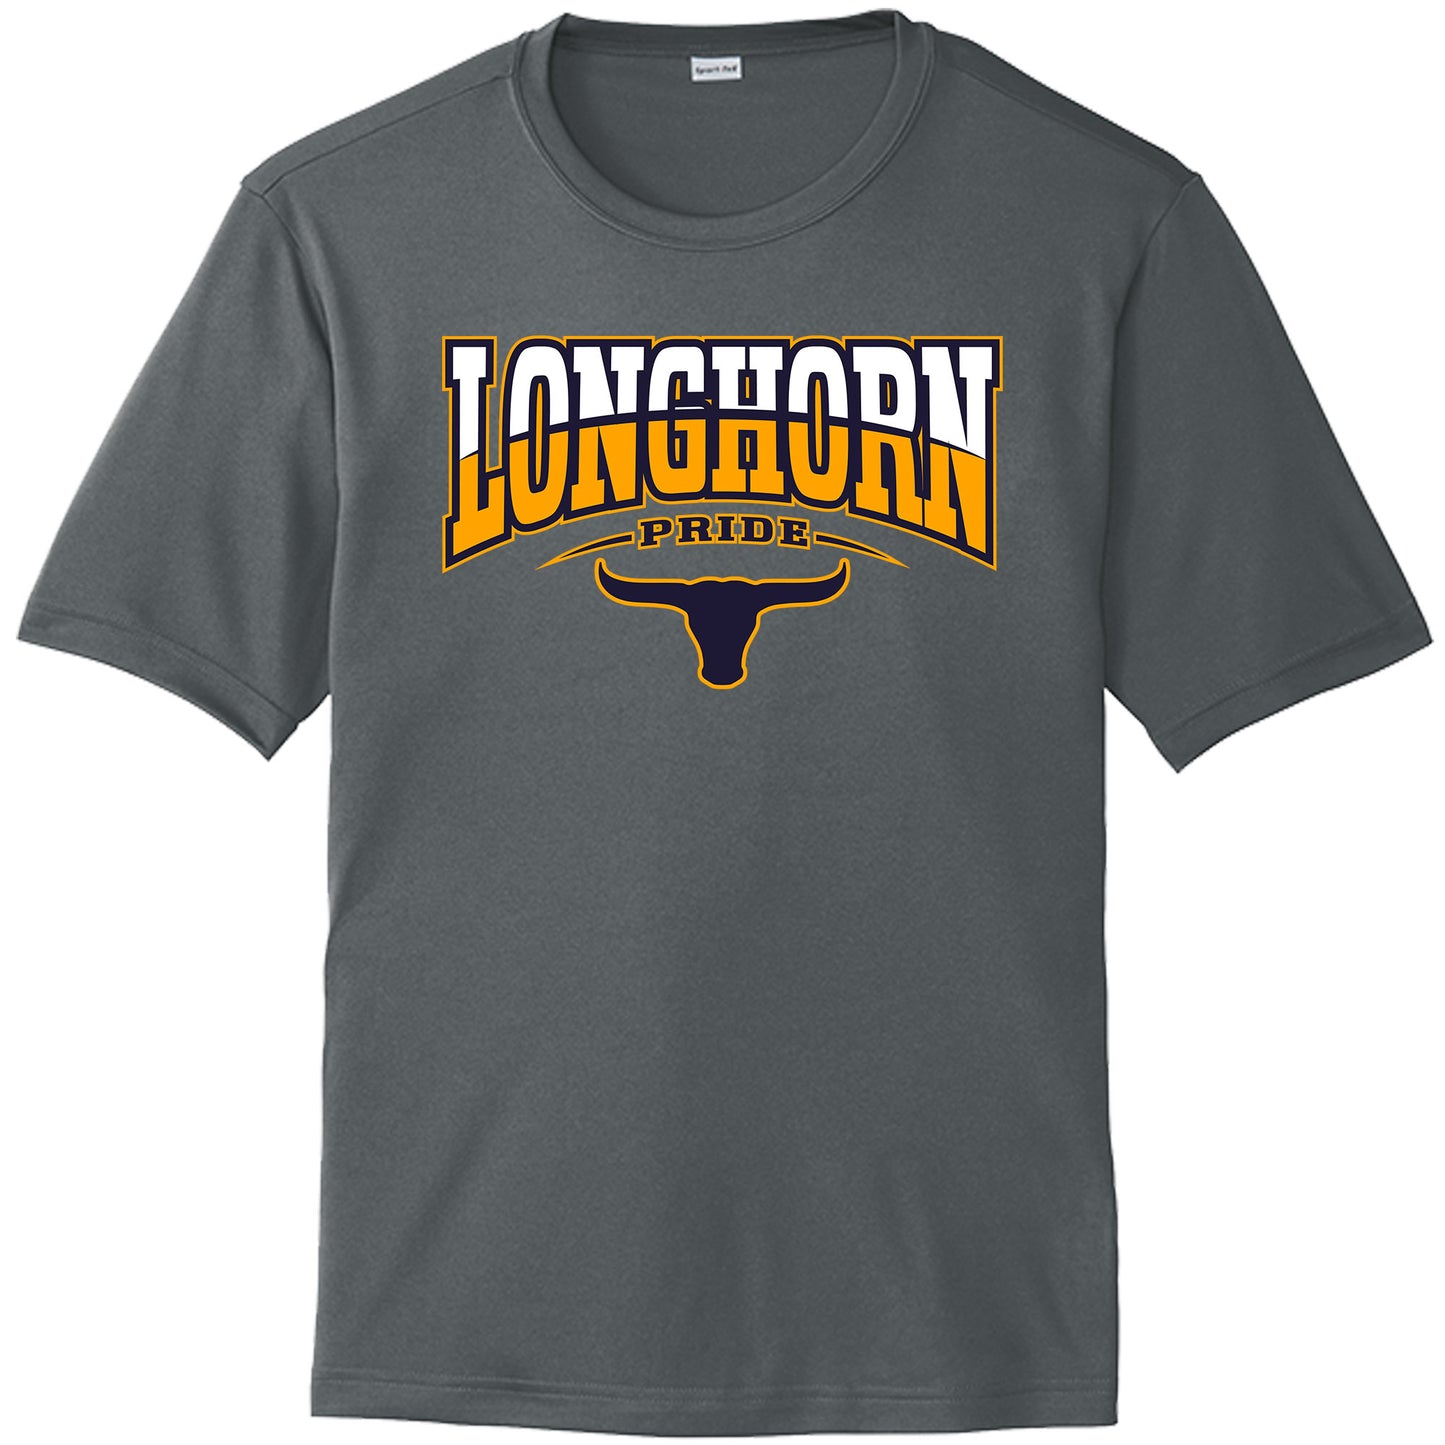 Lennard High School Drifit Shirt with Printed Longhorns Logo